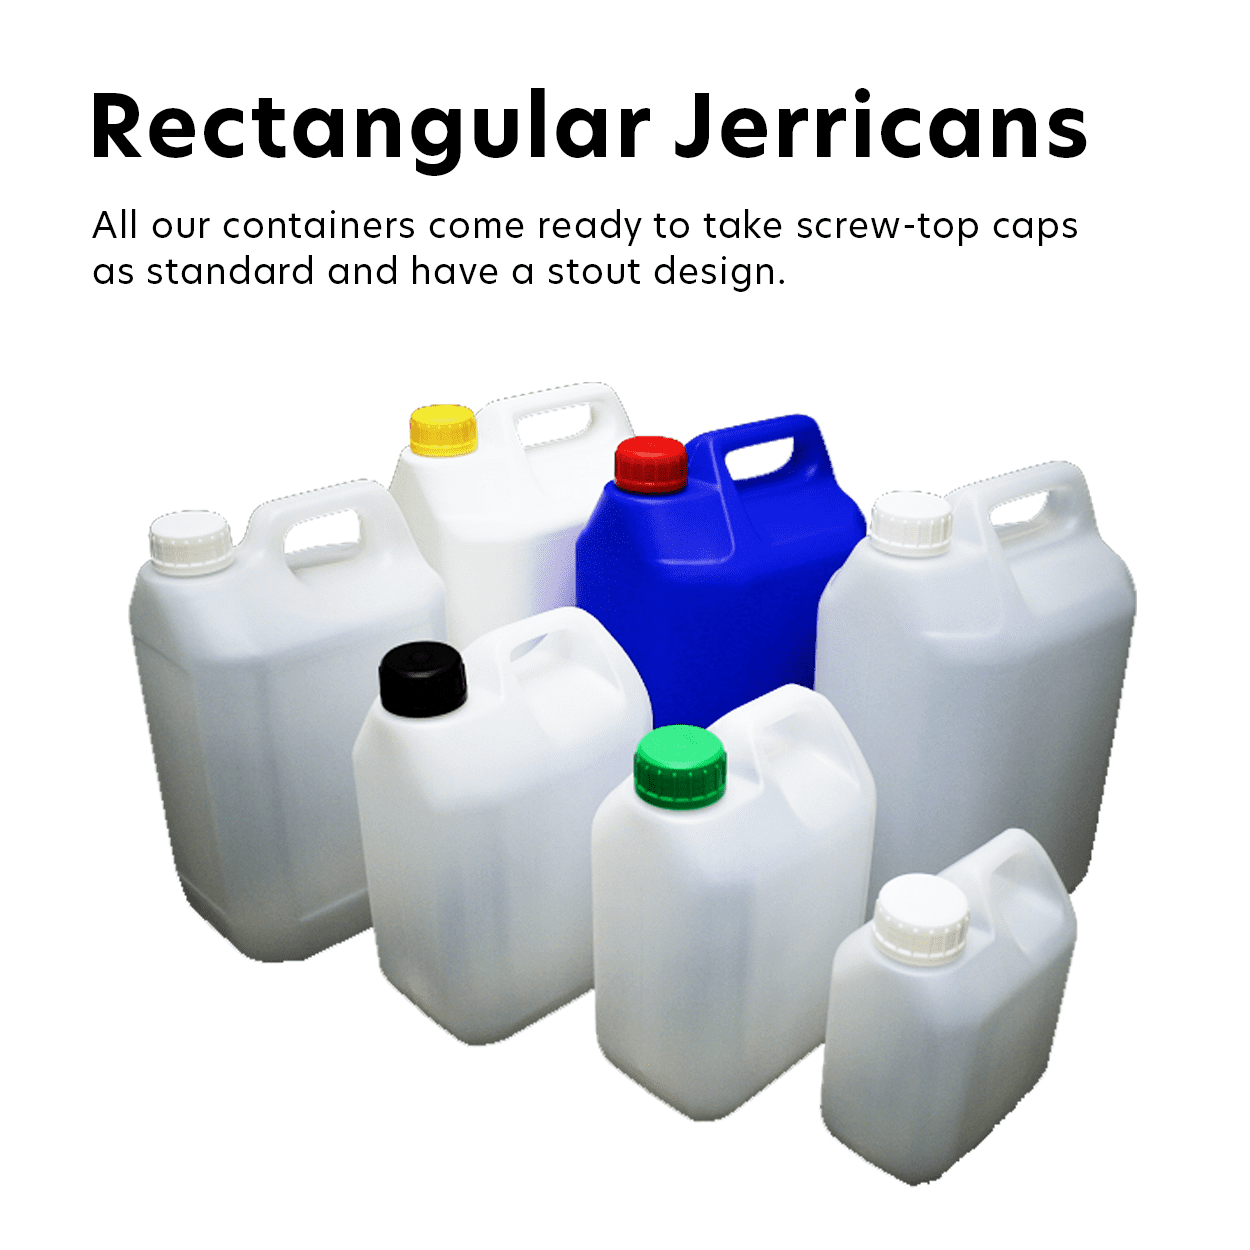 Rectangular Jerricans